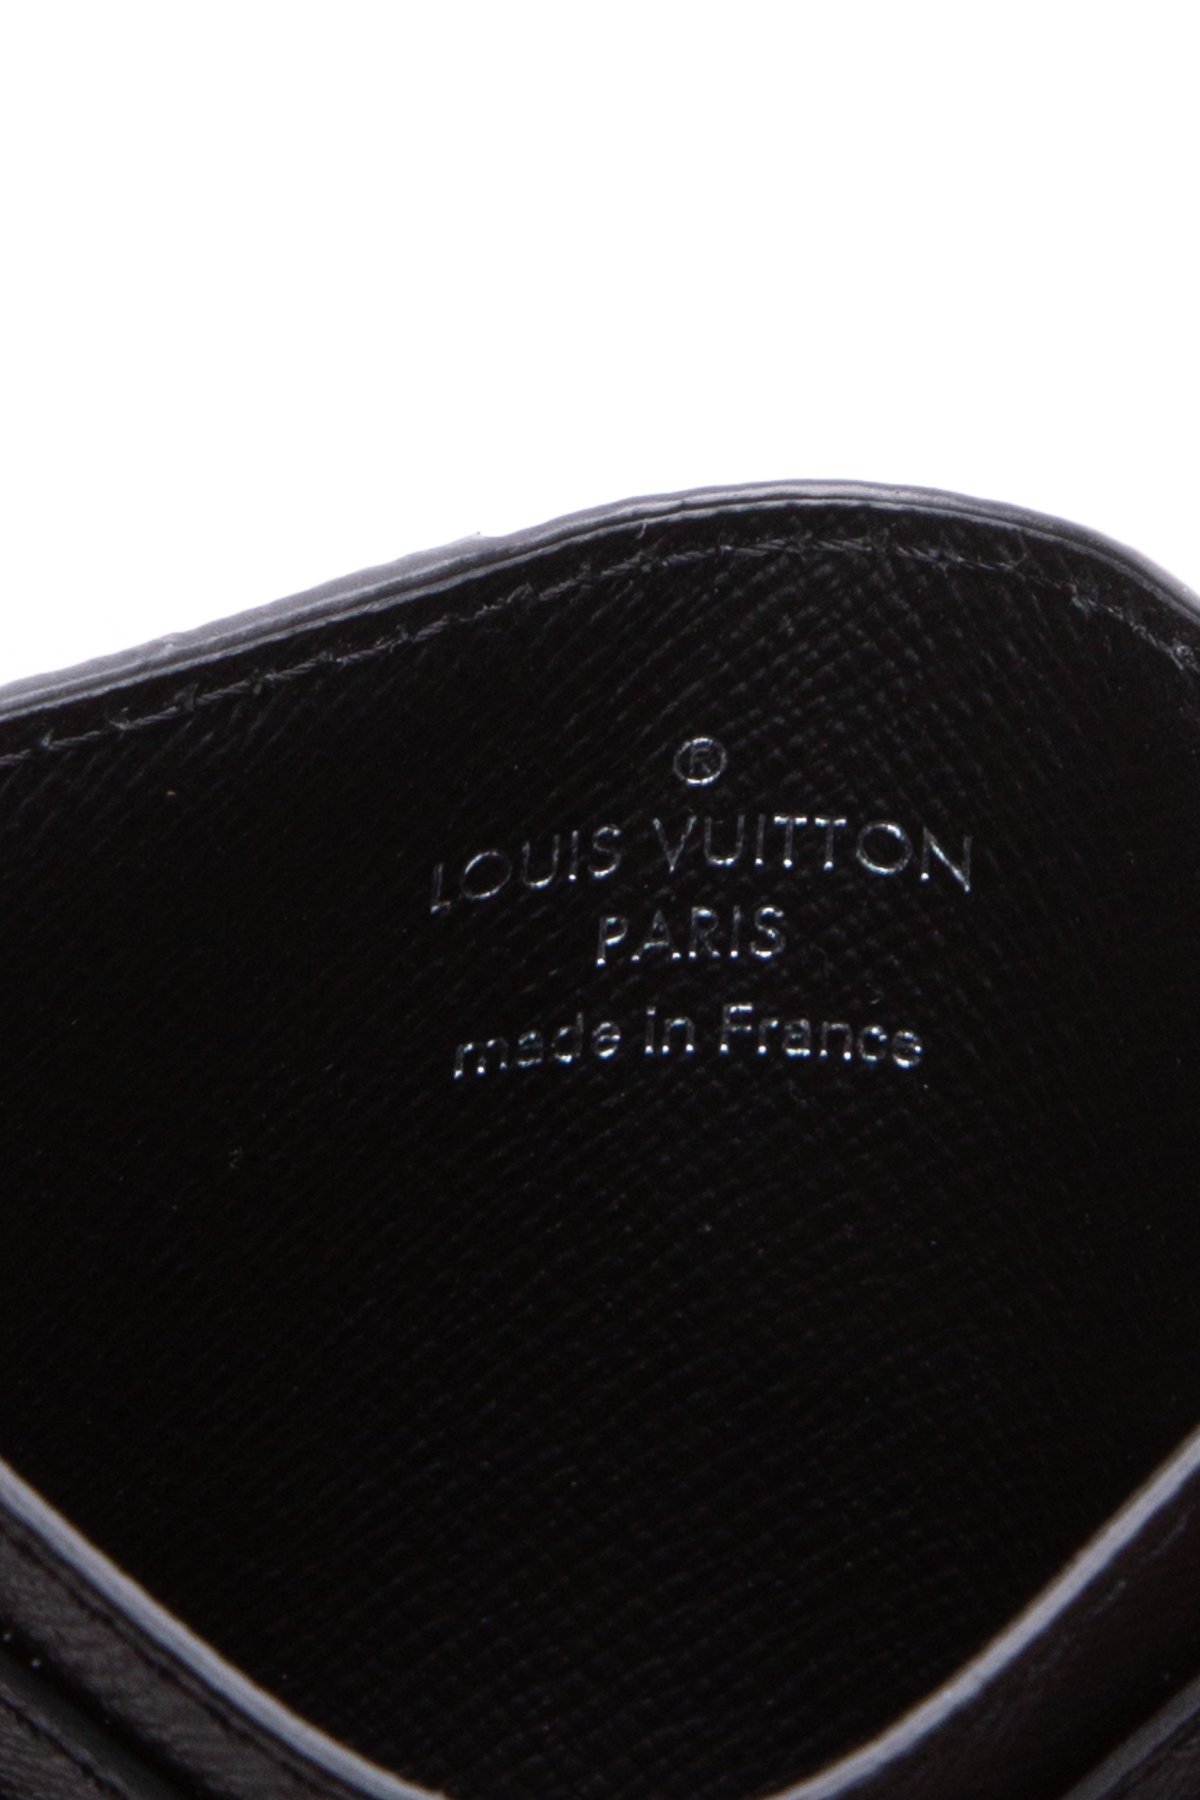 Louis Vuitton Neo Wallet Trunk Monogram Macassar